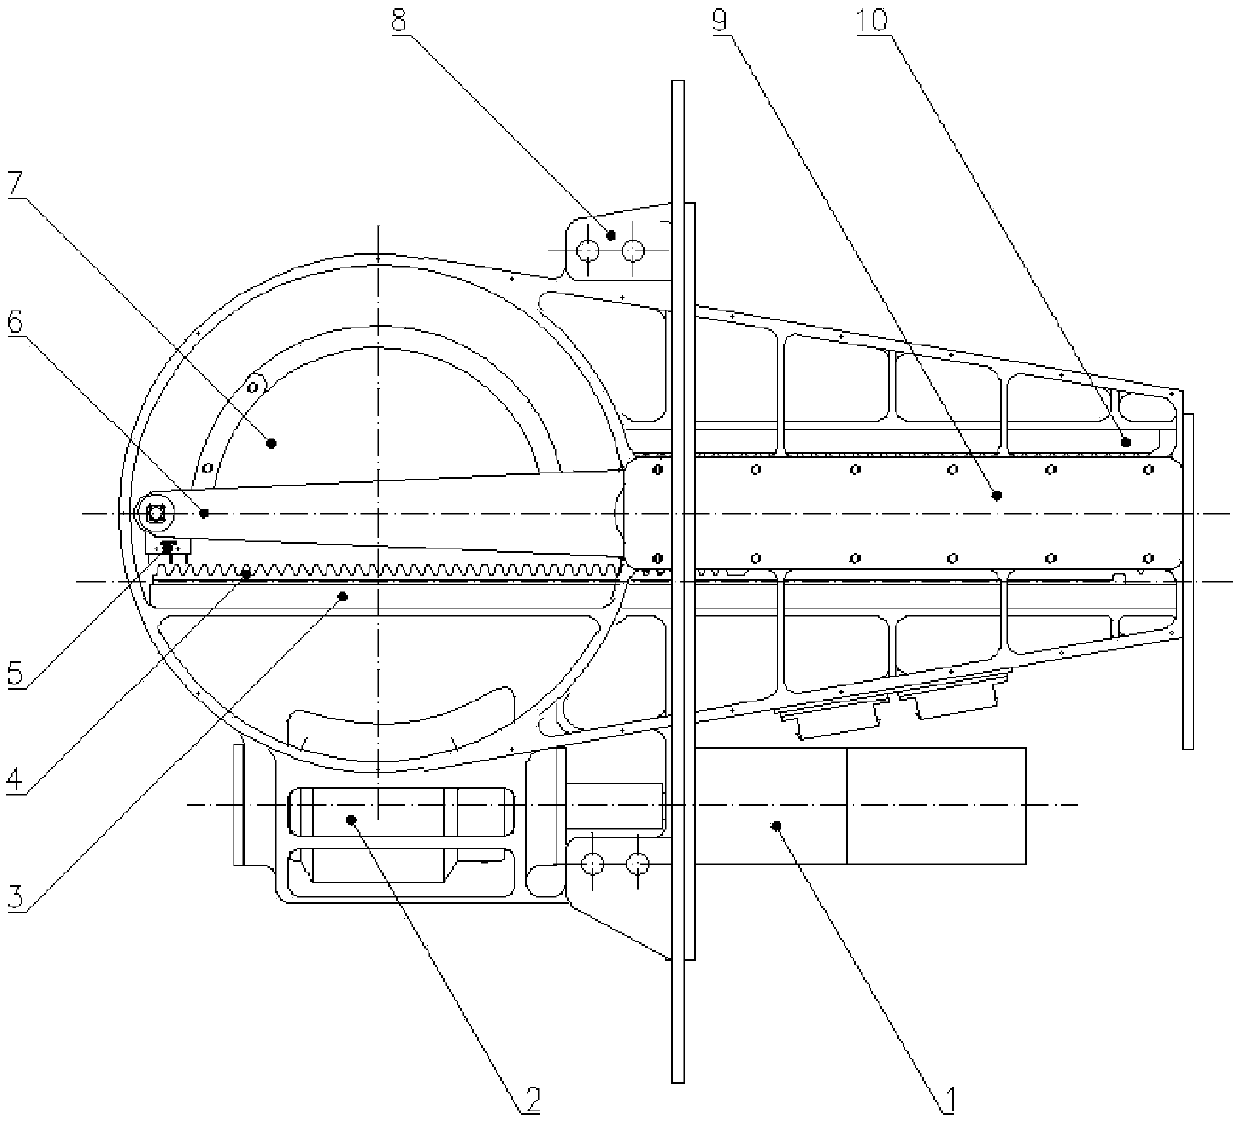 Spatial push mechanism